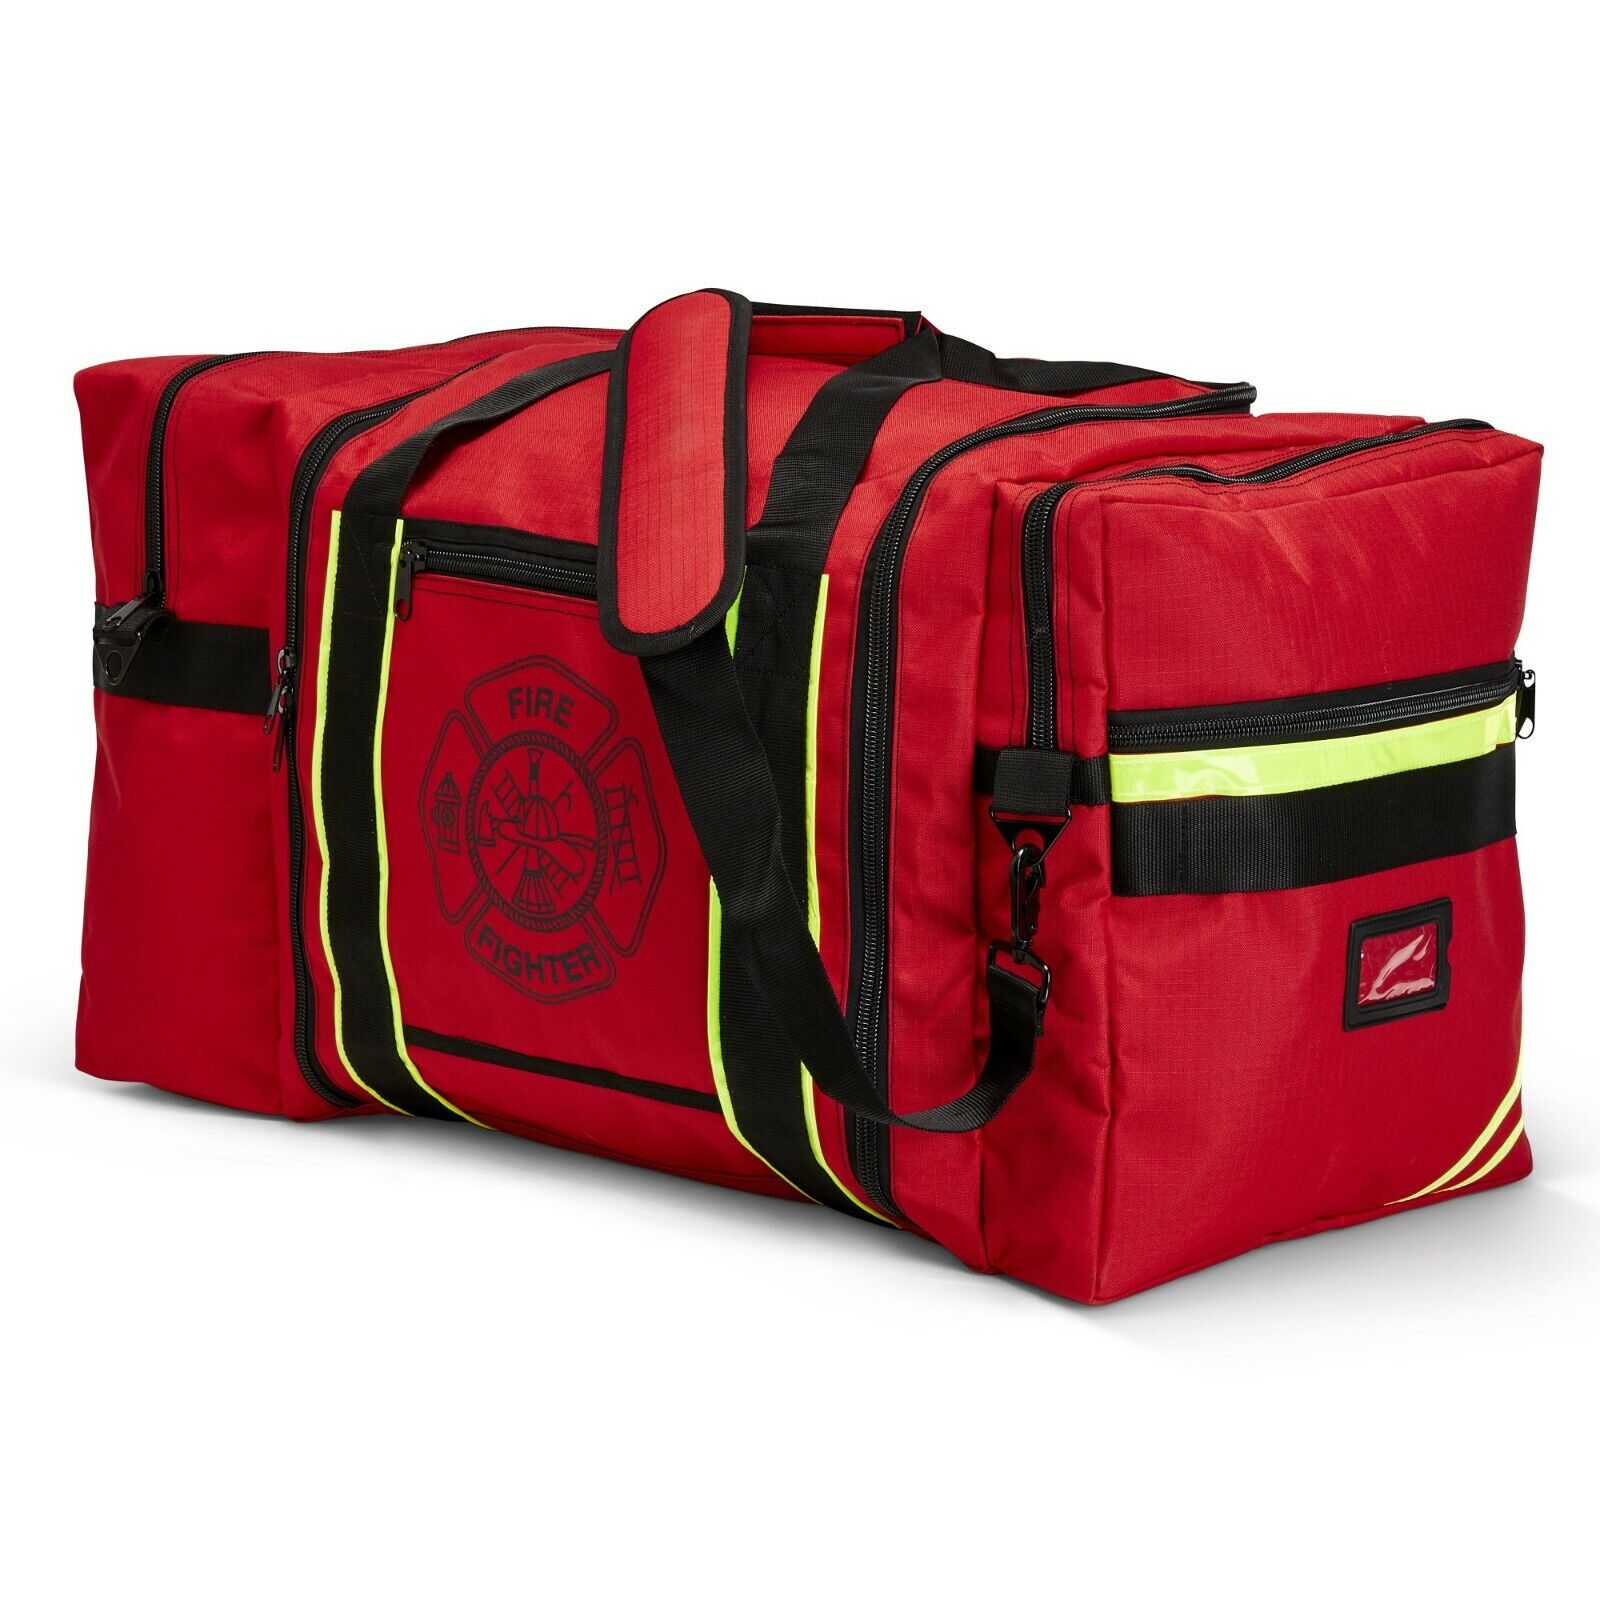 Line2design Firefighter Jumbo Turnout Gear Bag With Padded Shoulder Strap - Red